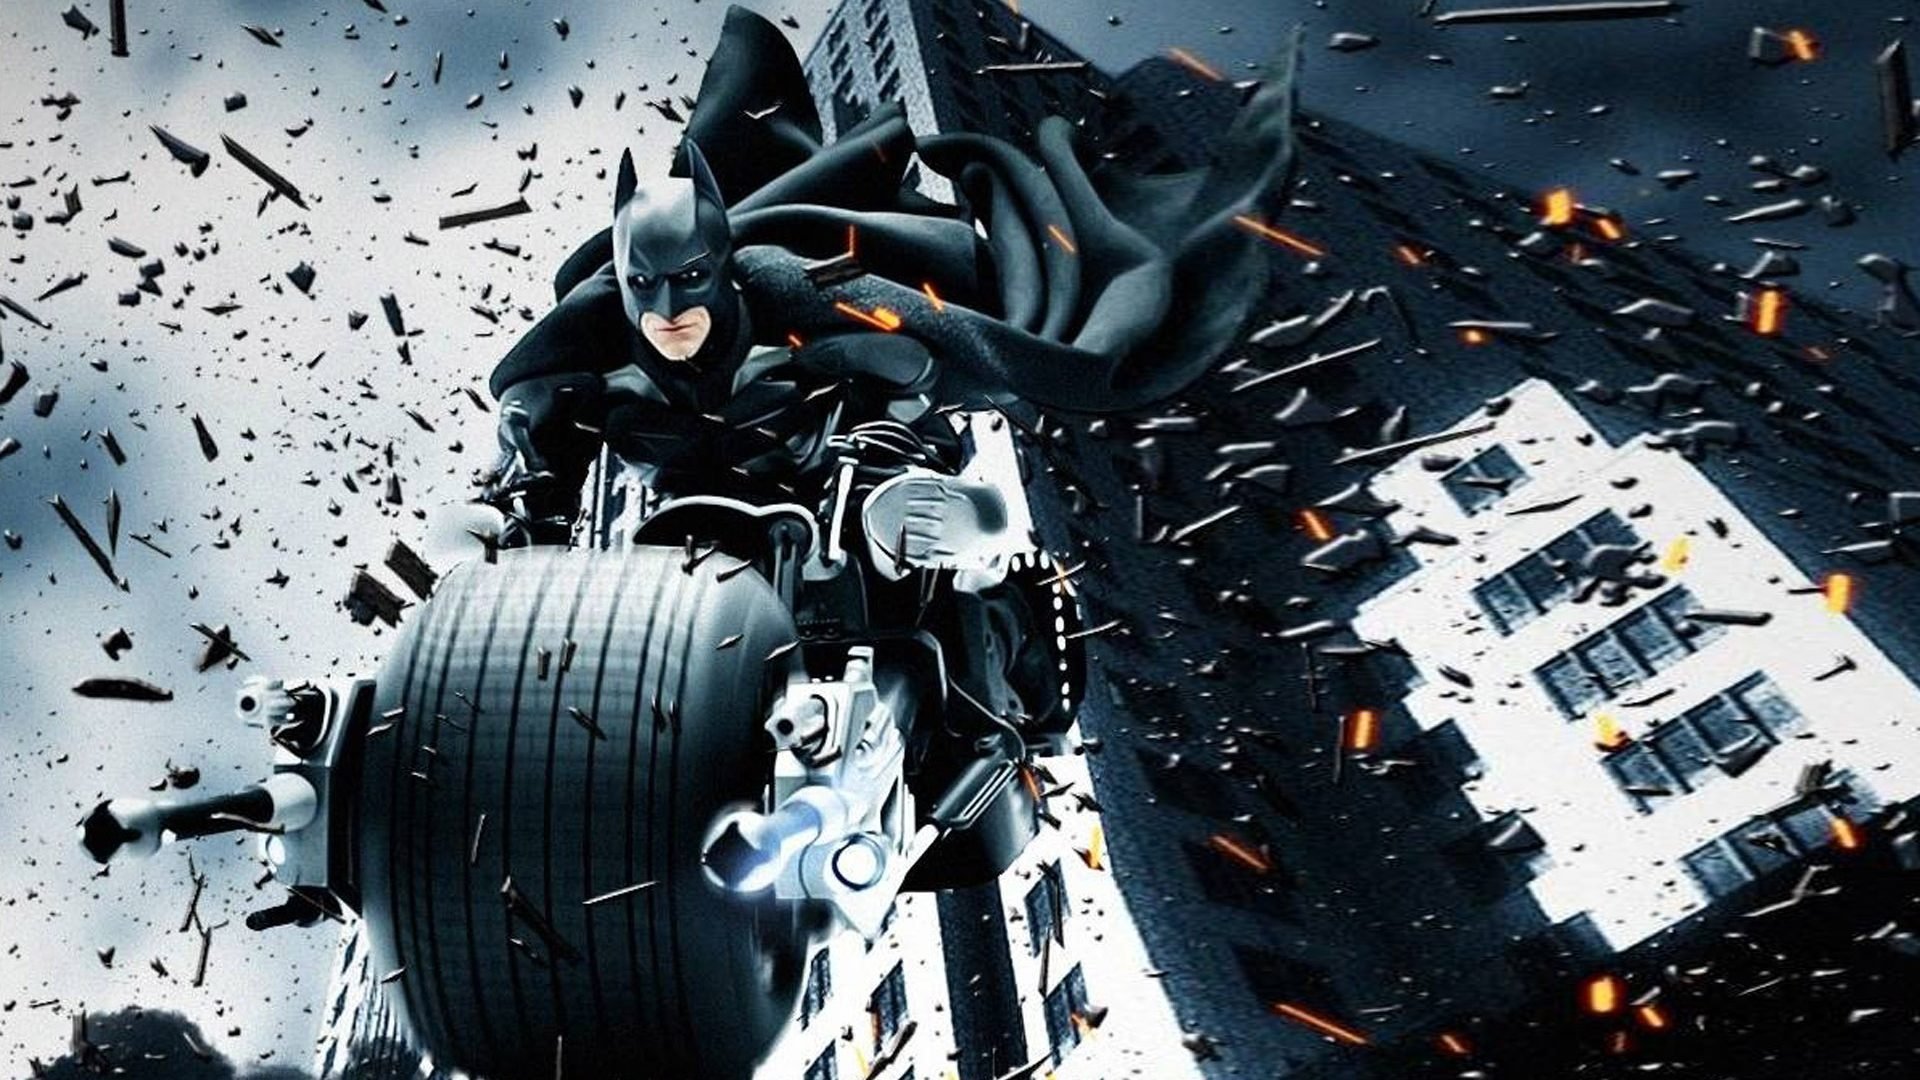 Batman Image The Dark Knight Movie HD Wallpaper For Mobile Phones And, Wallpaper13.com